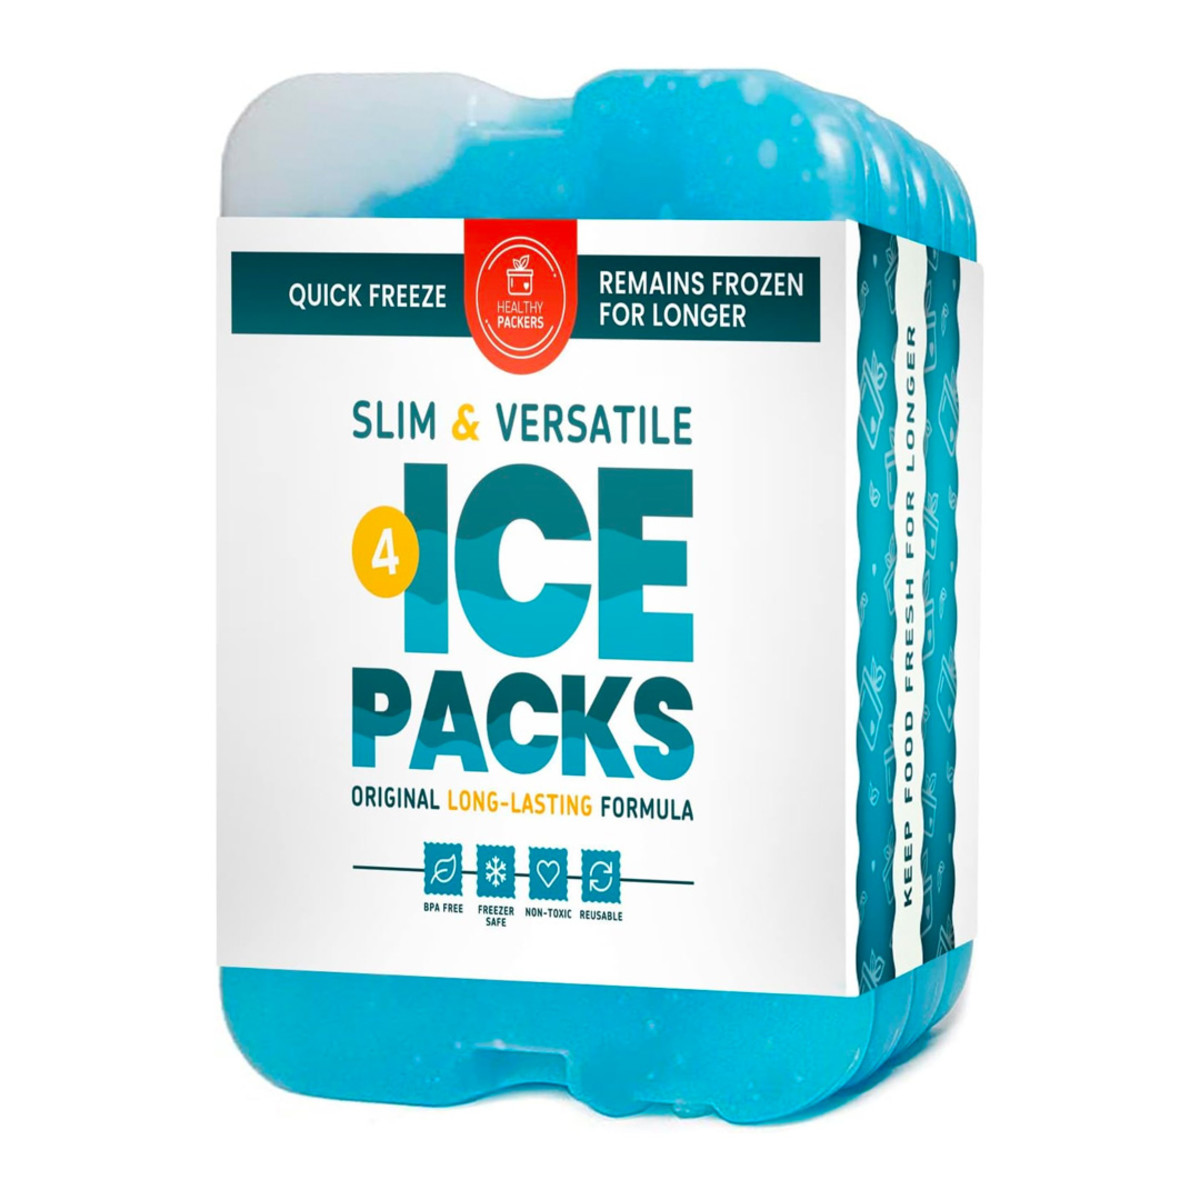 https://www.mensjournal.com/.image/t_share/MjAxODY1NDg2NjQ2OTEyMjkw/healthy-packers-ice-packs.jpg